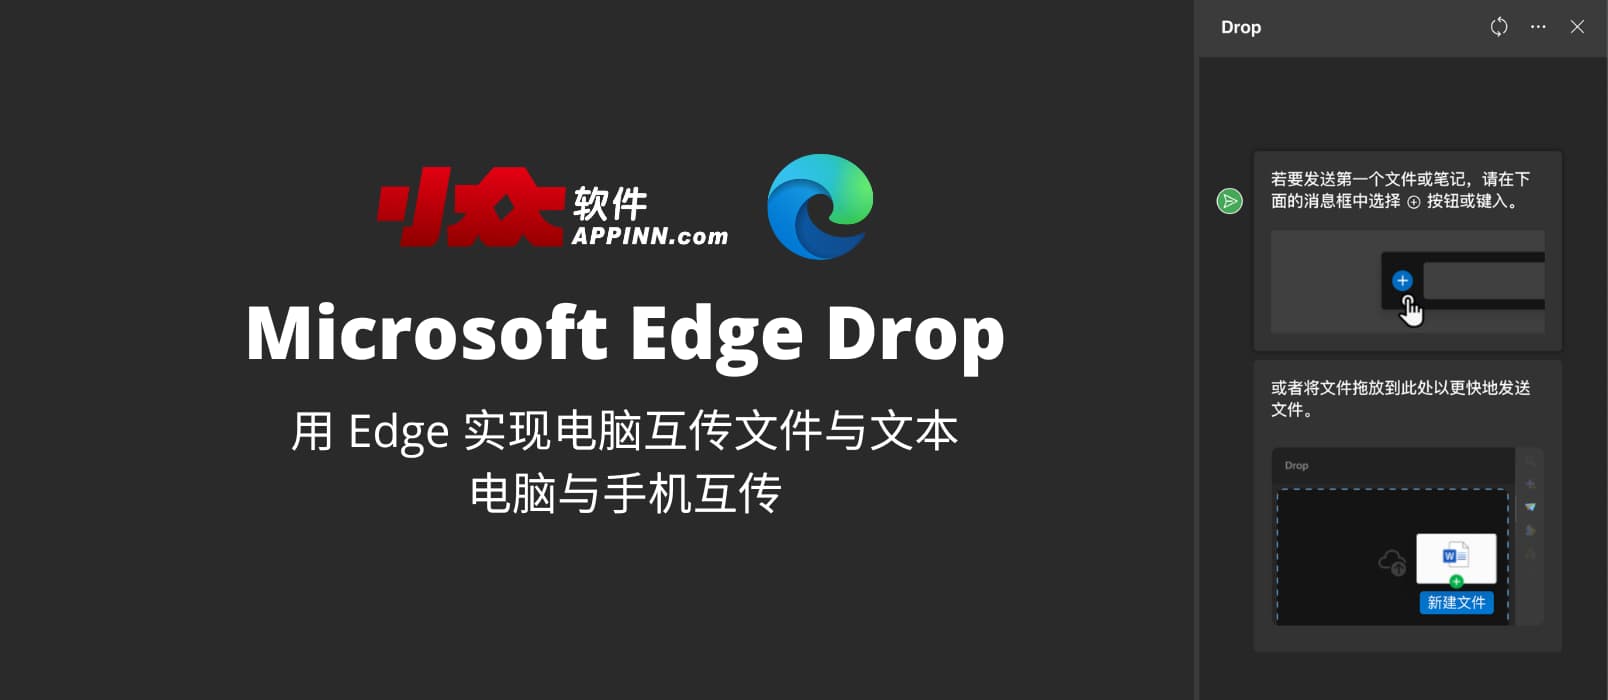 Microsoft Edge Drop - 用 Edge 实现电脑互传文件与文本，电脑与手机互传